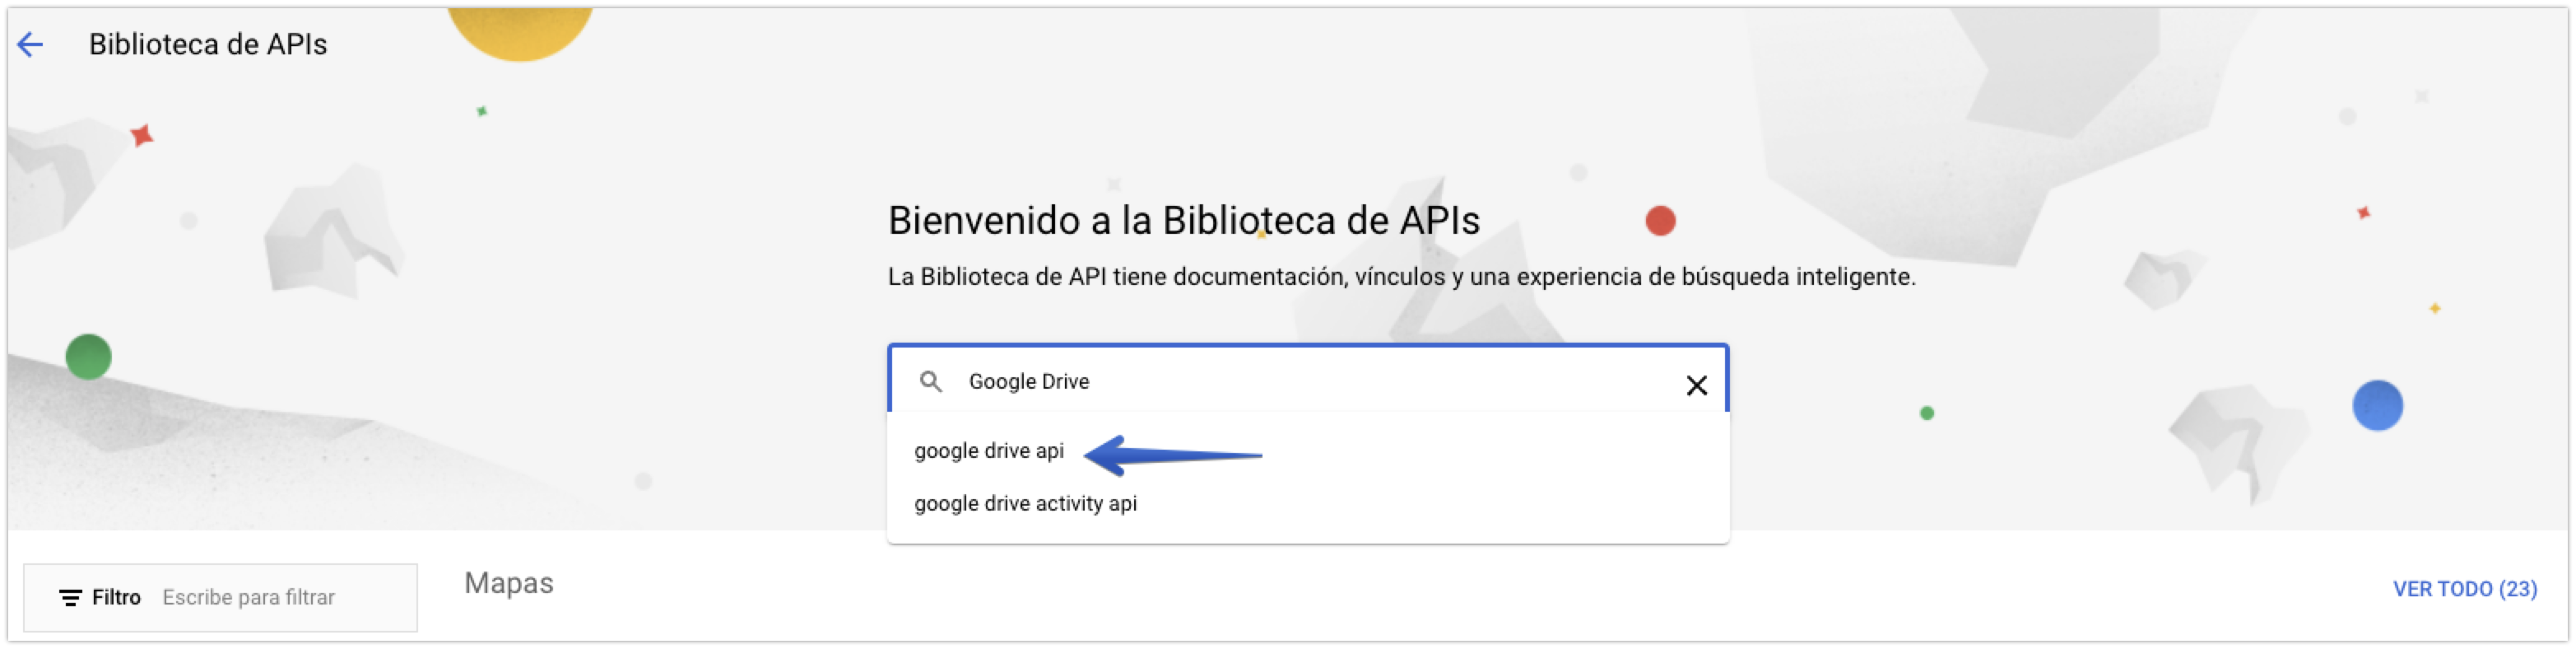 Búsqueda de la API de Google Drive en la biblioteca de APIs